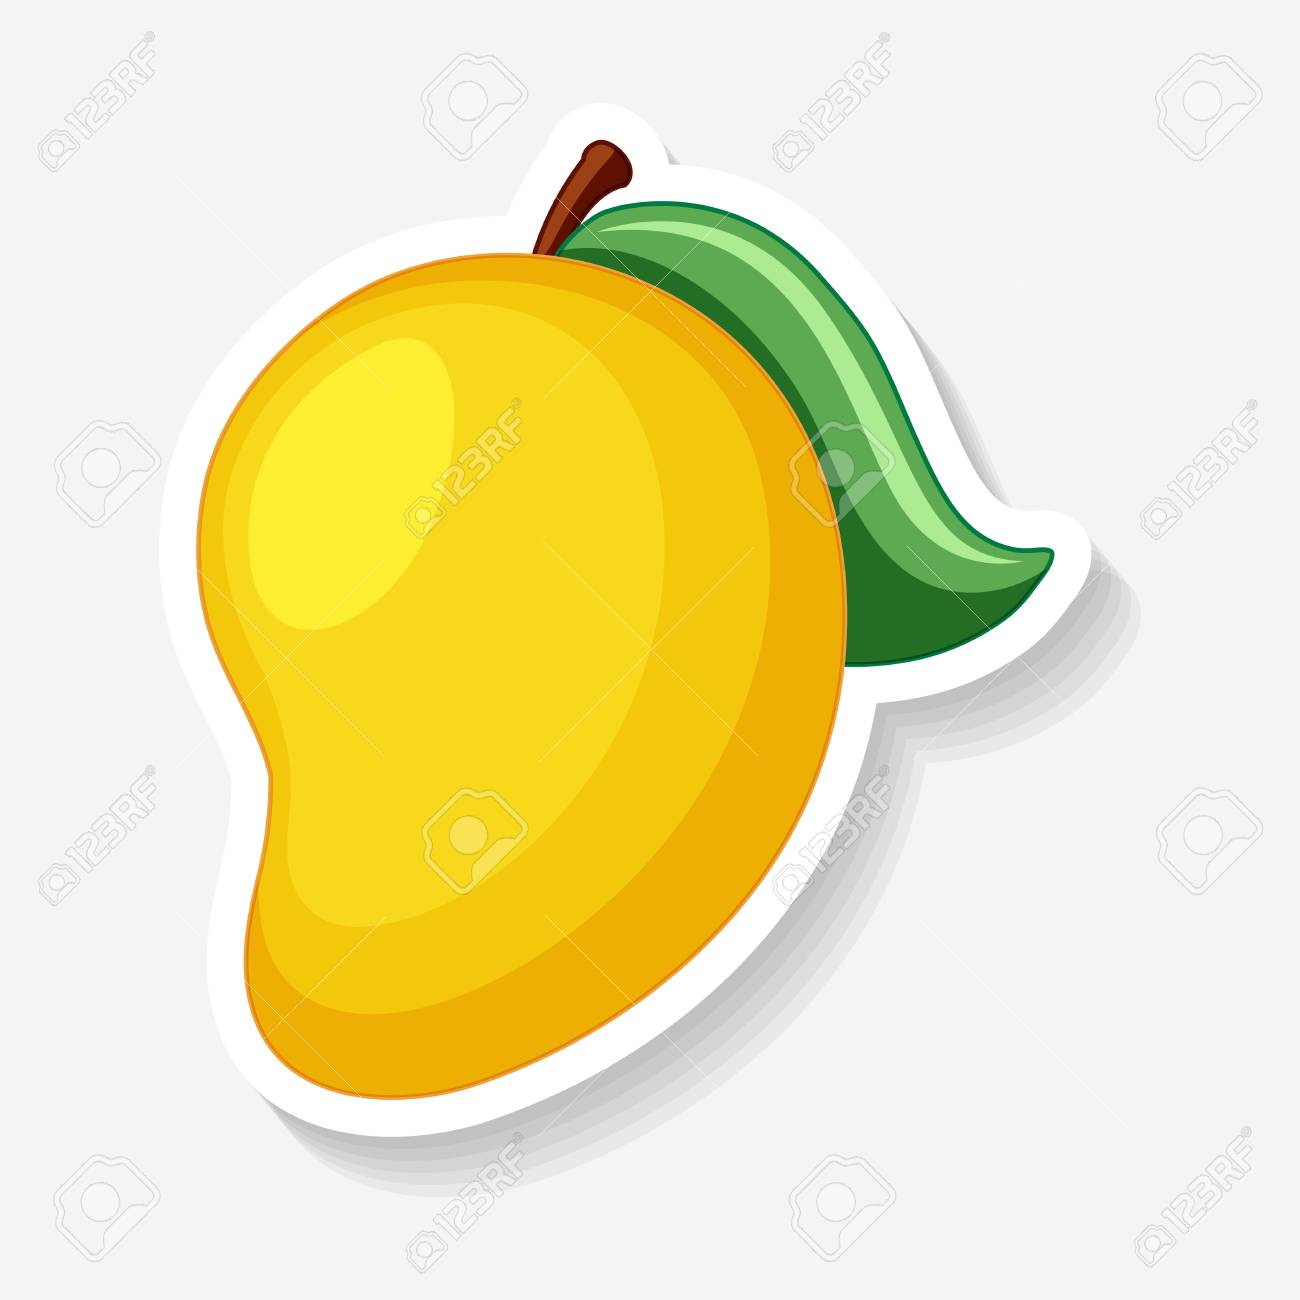 mango clipart printable